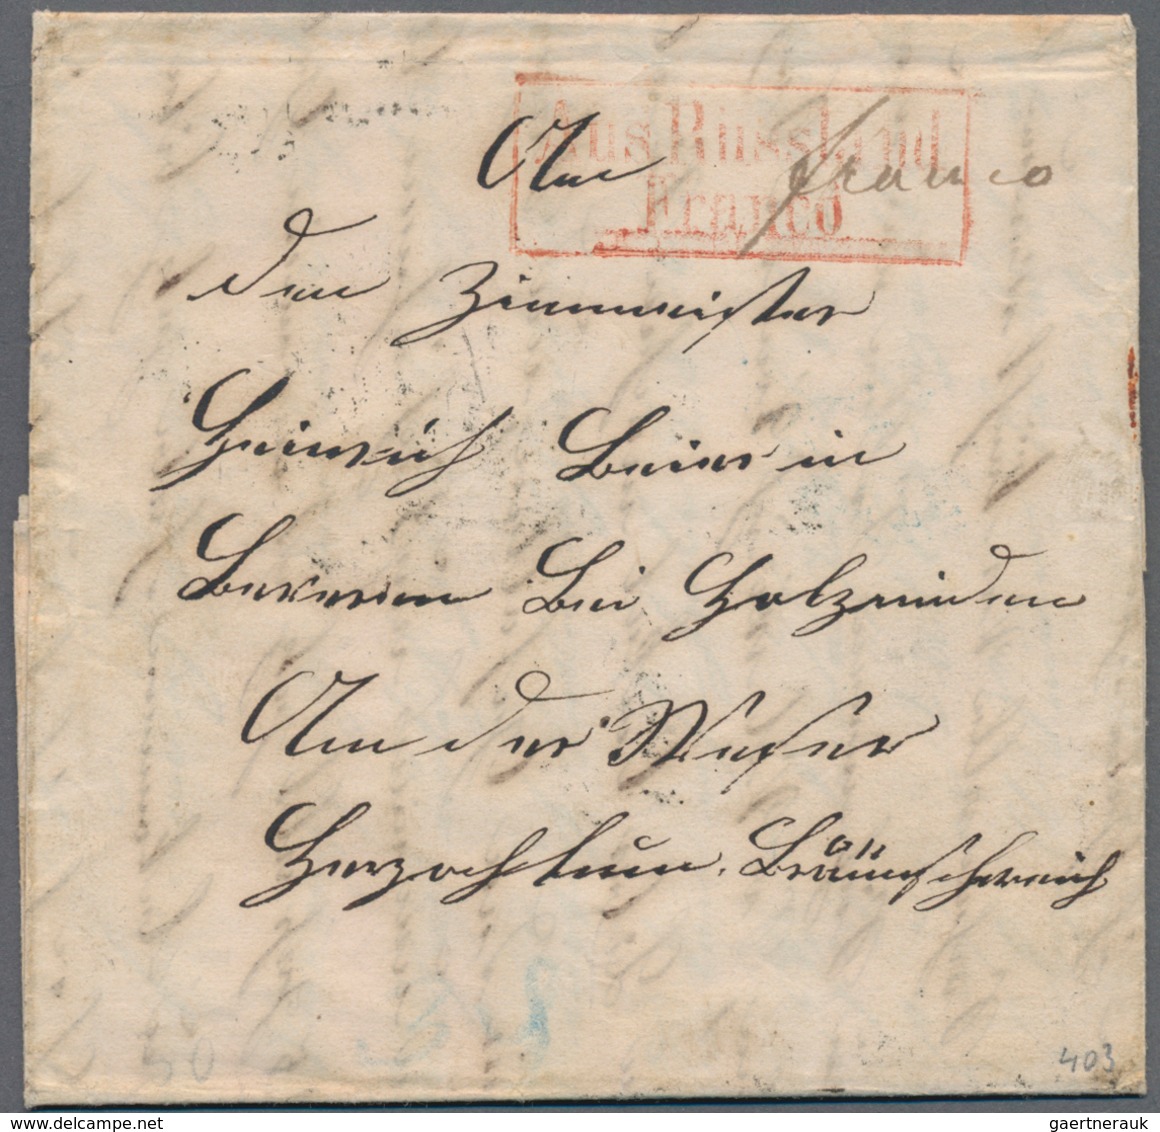 Russland - Vorphilatelie: 1861, Infrequnt Prepaid Letter (franco) From Saint Petersburg (Russia) Wit - ...-1857 Prephilately